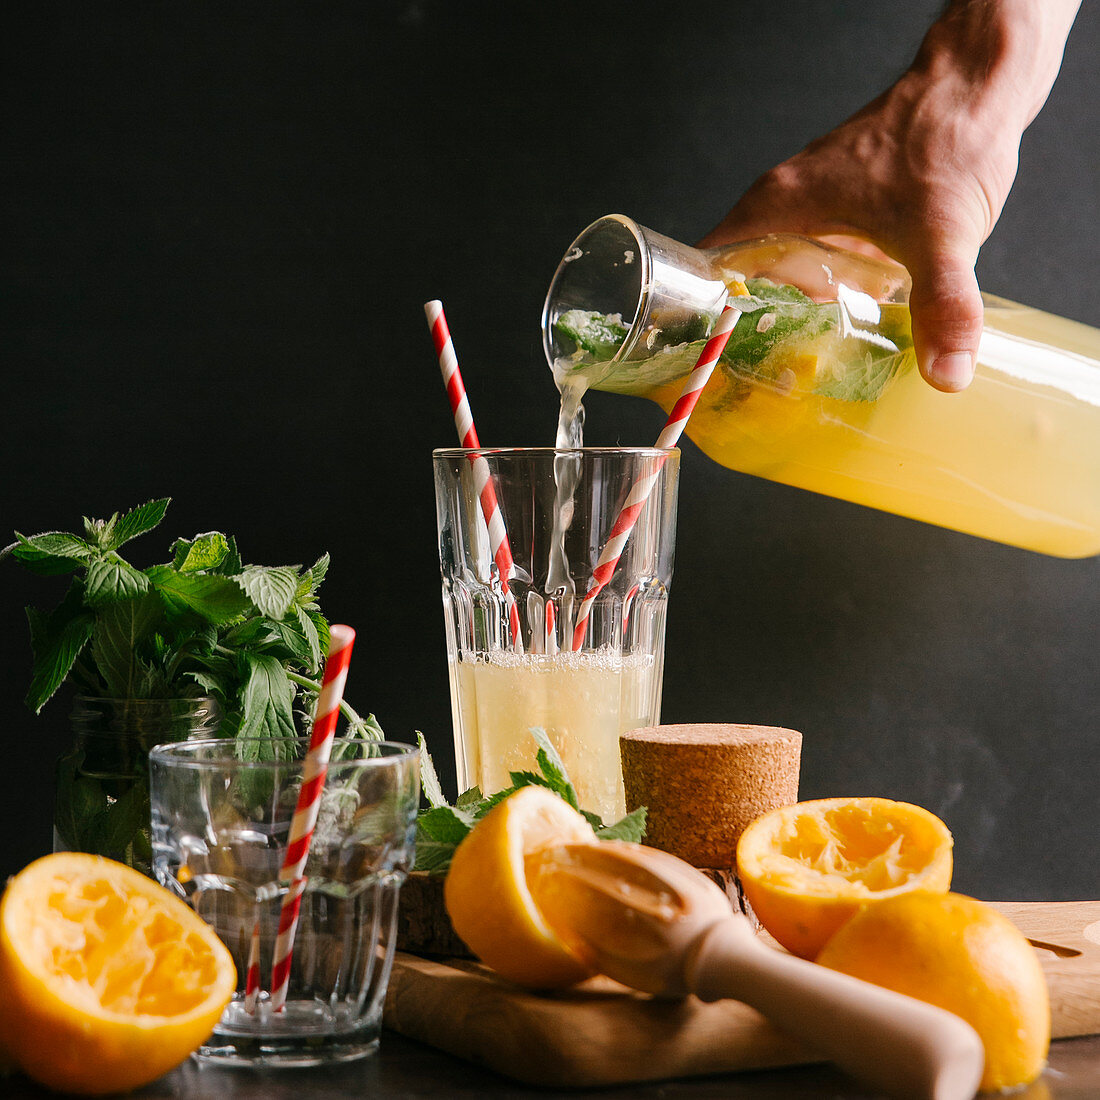 Lemonade being poured